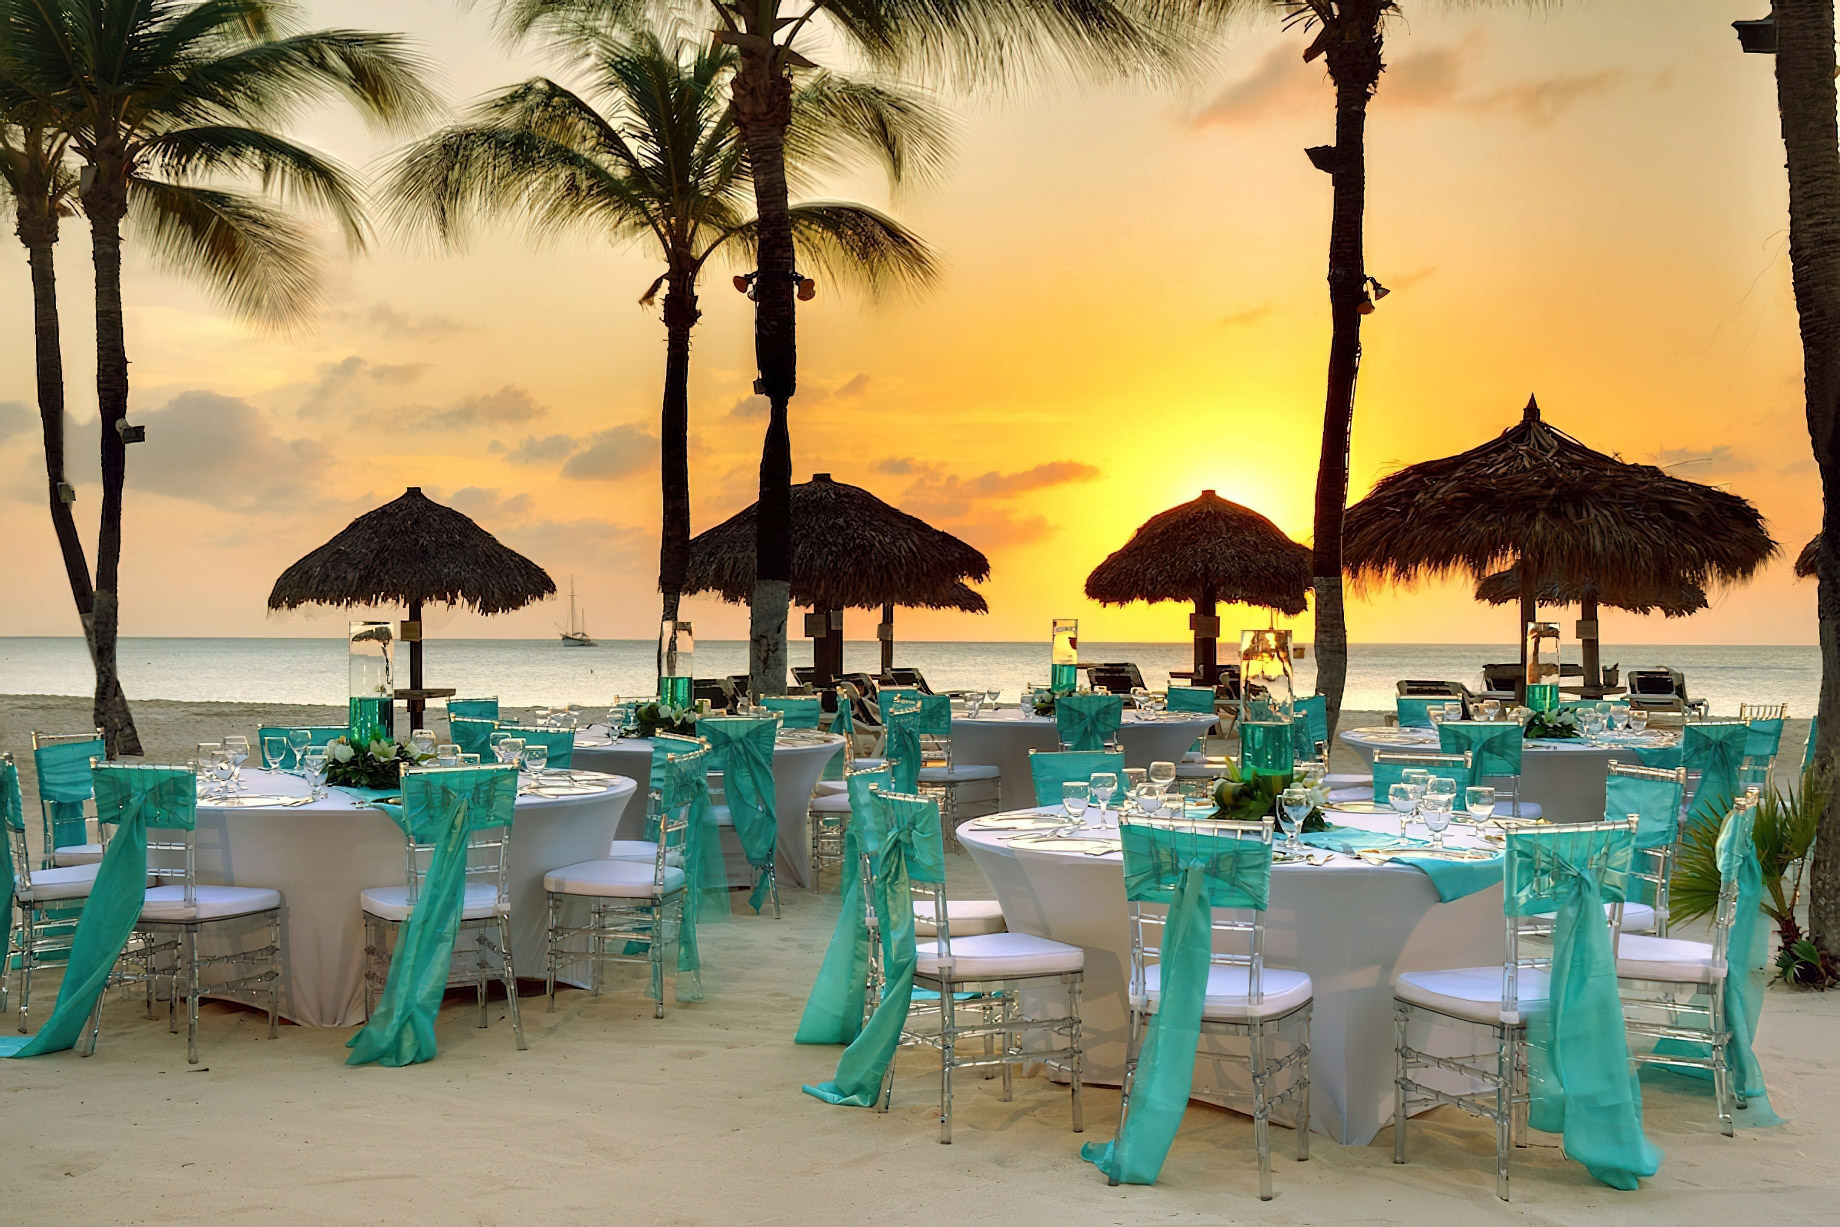 Barceló Aruba Palm Beach Resort – Noord, Aruba – Beach Resort Sunset